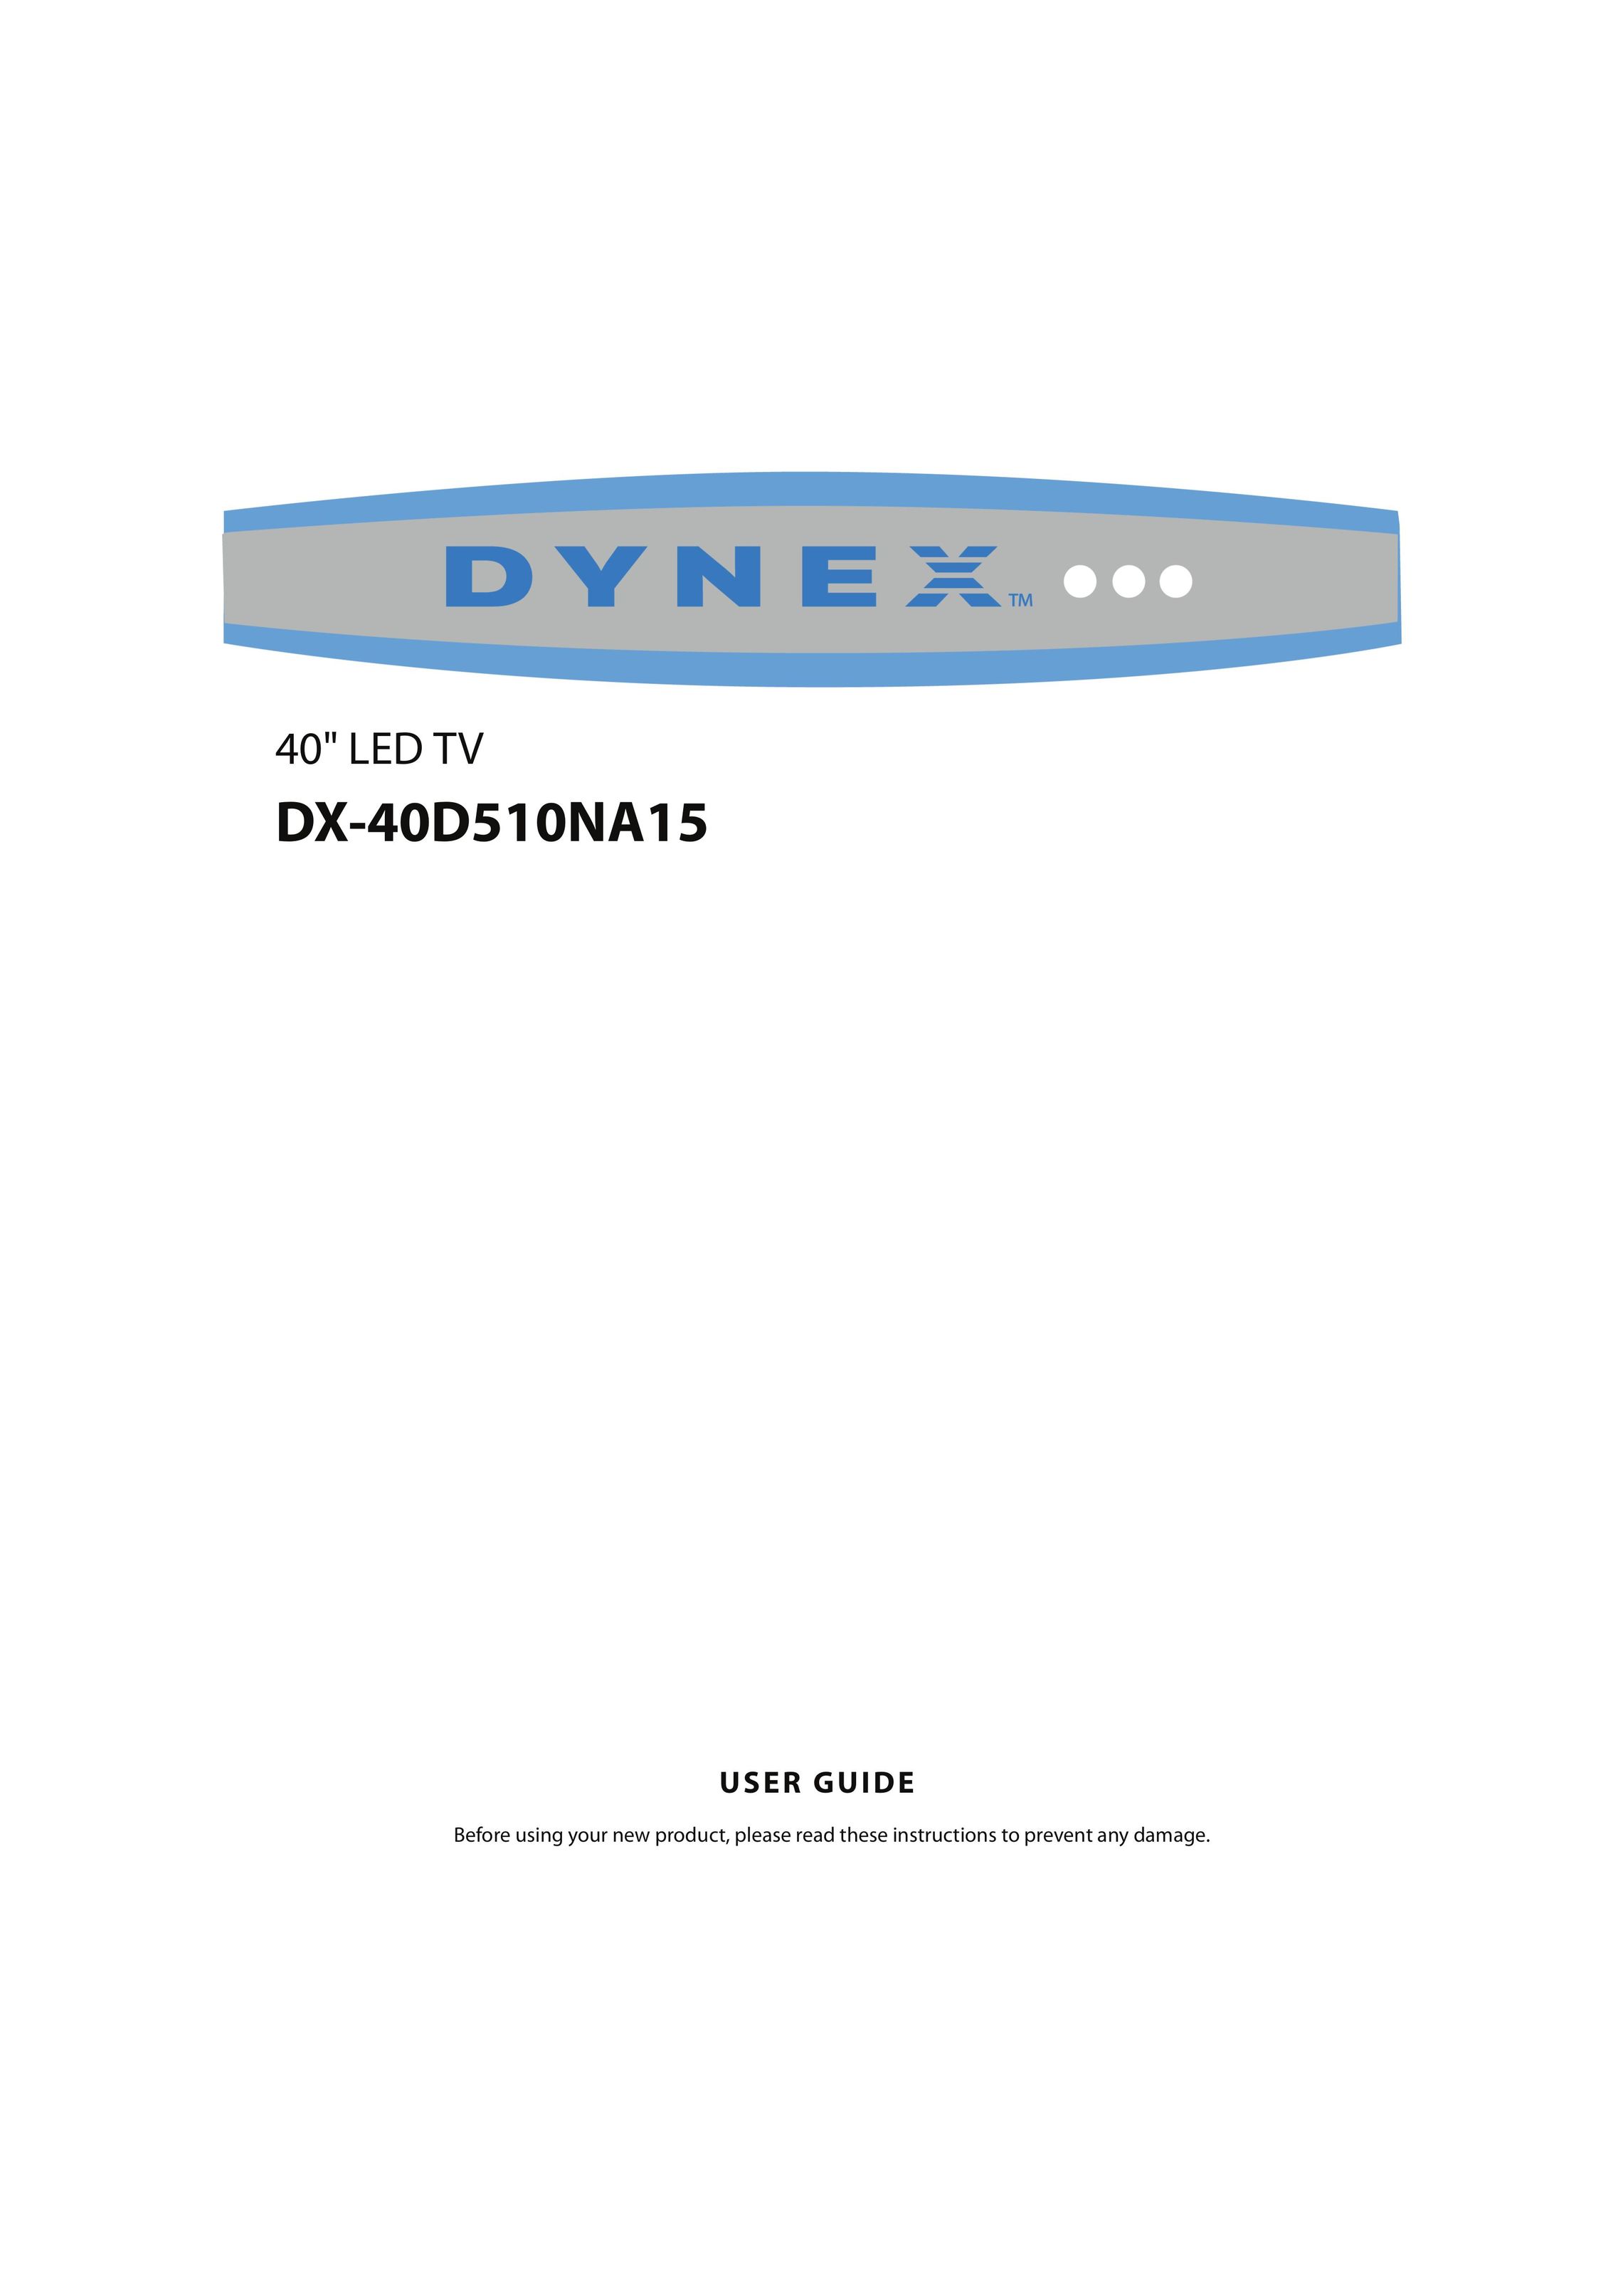 Dynex DX-40D510NA15 Car Satellite TV System User Manual